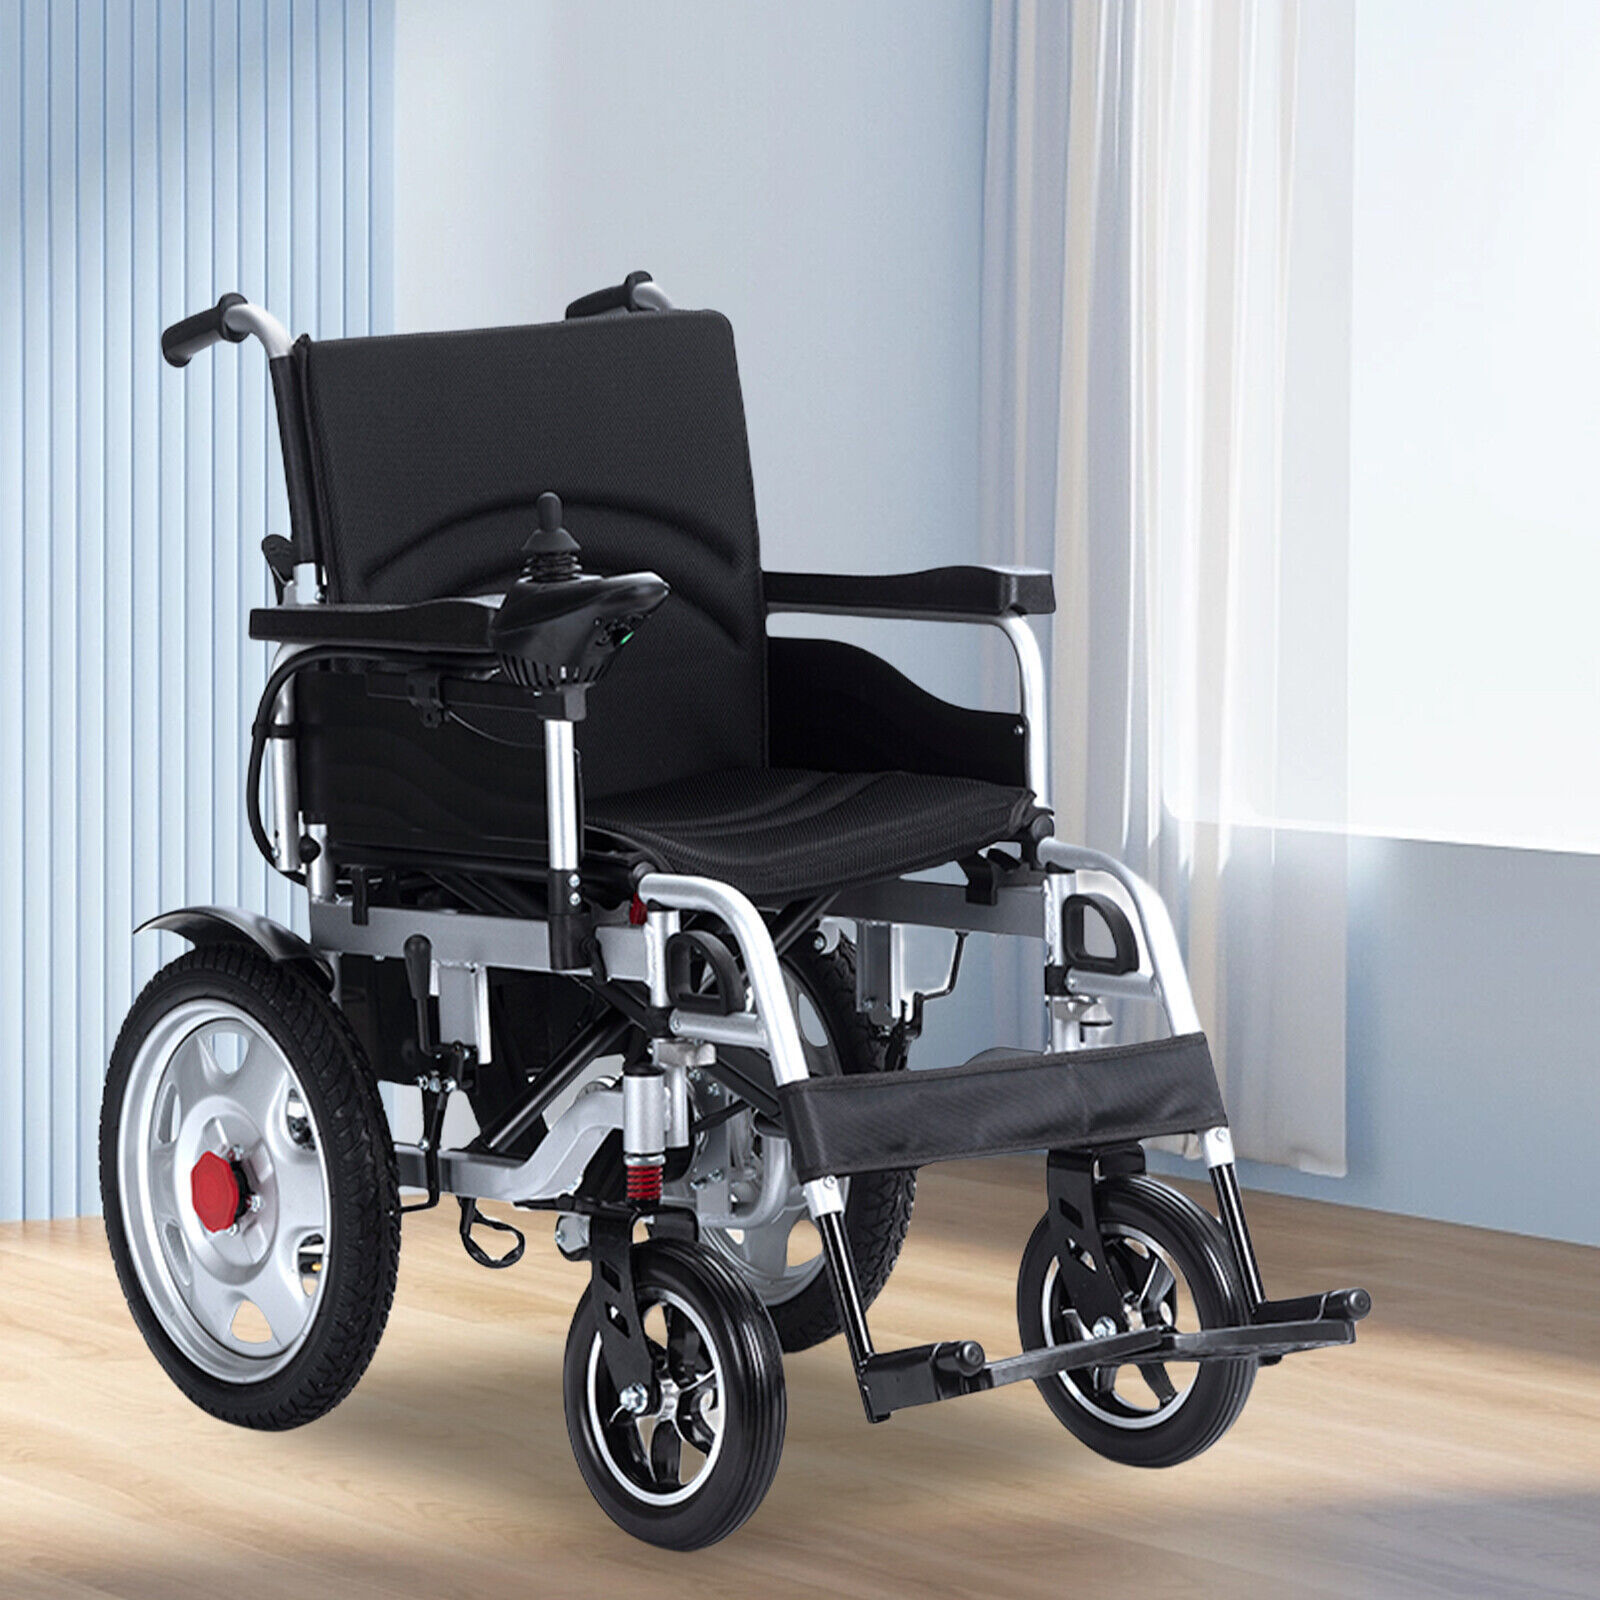 500W Dual Motor Electric Wheelchair Folding Mobility Aid Motorized Wheelchaira